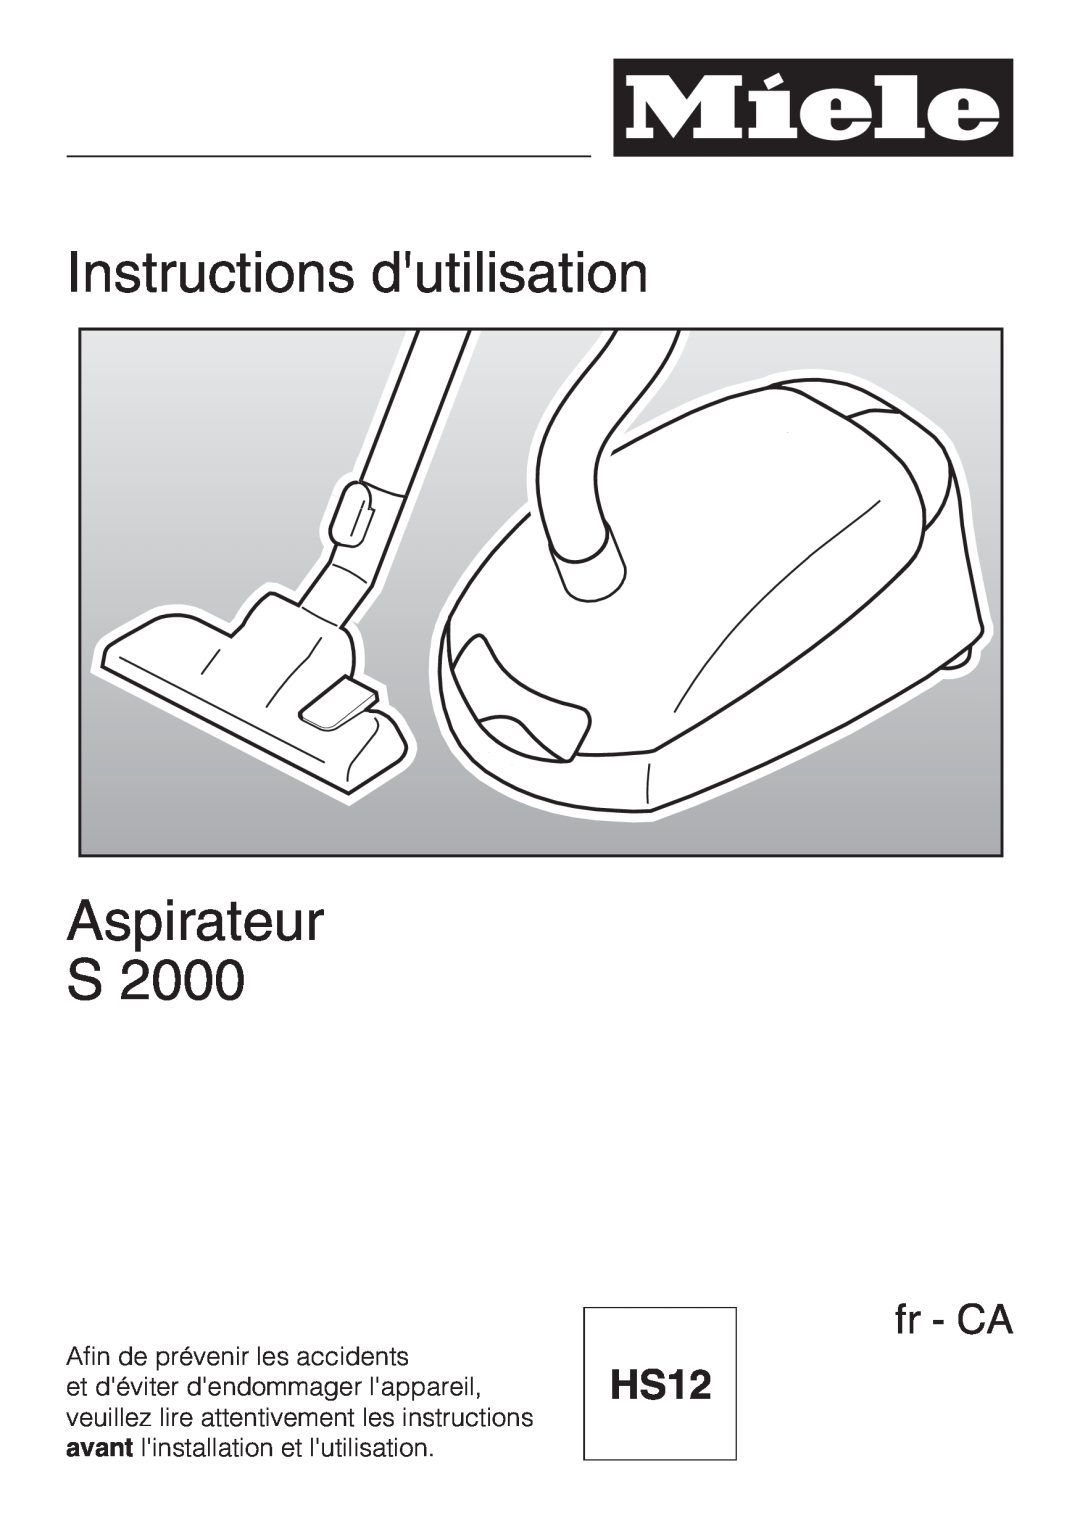 Miele S 2000 operating instructions Instructions dutilisation, Aspirateur, fr - CA, HS12 